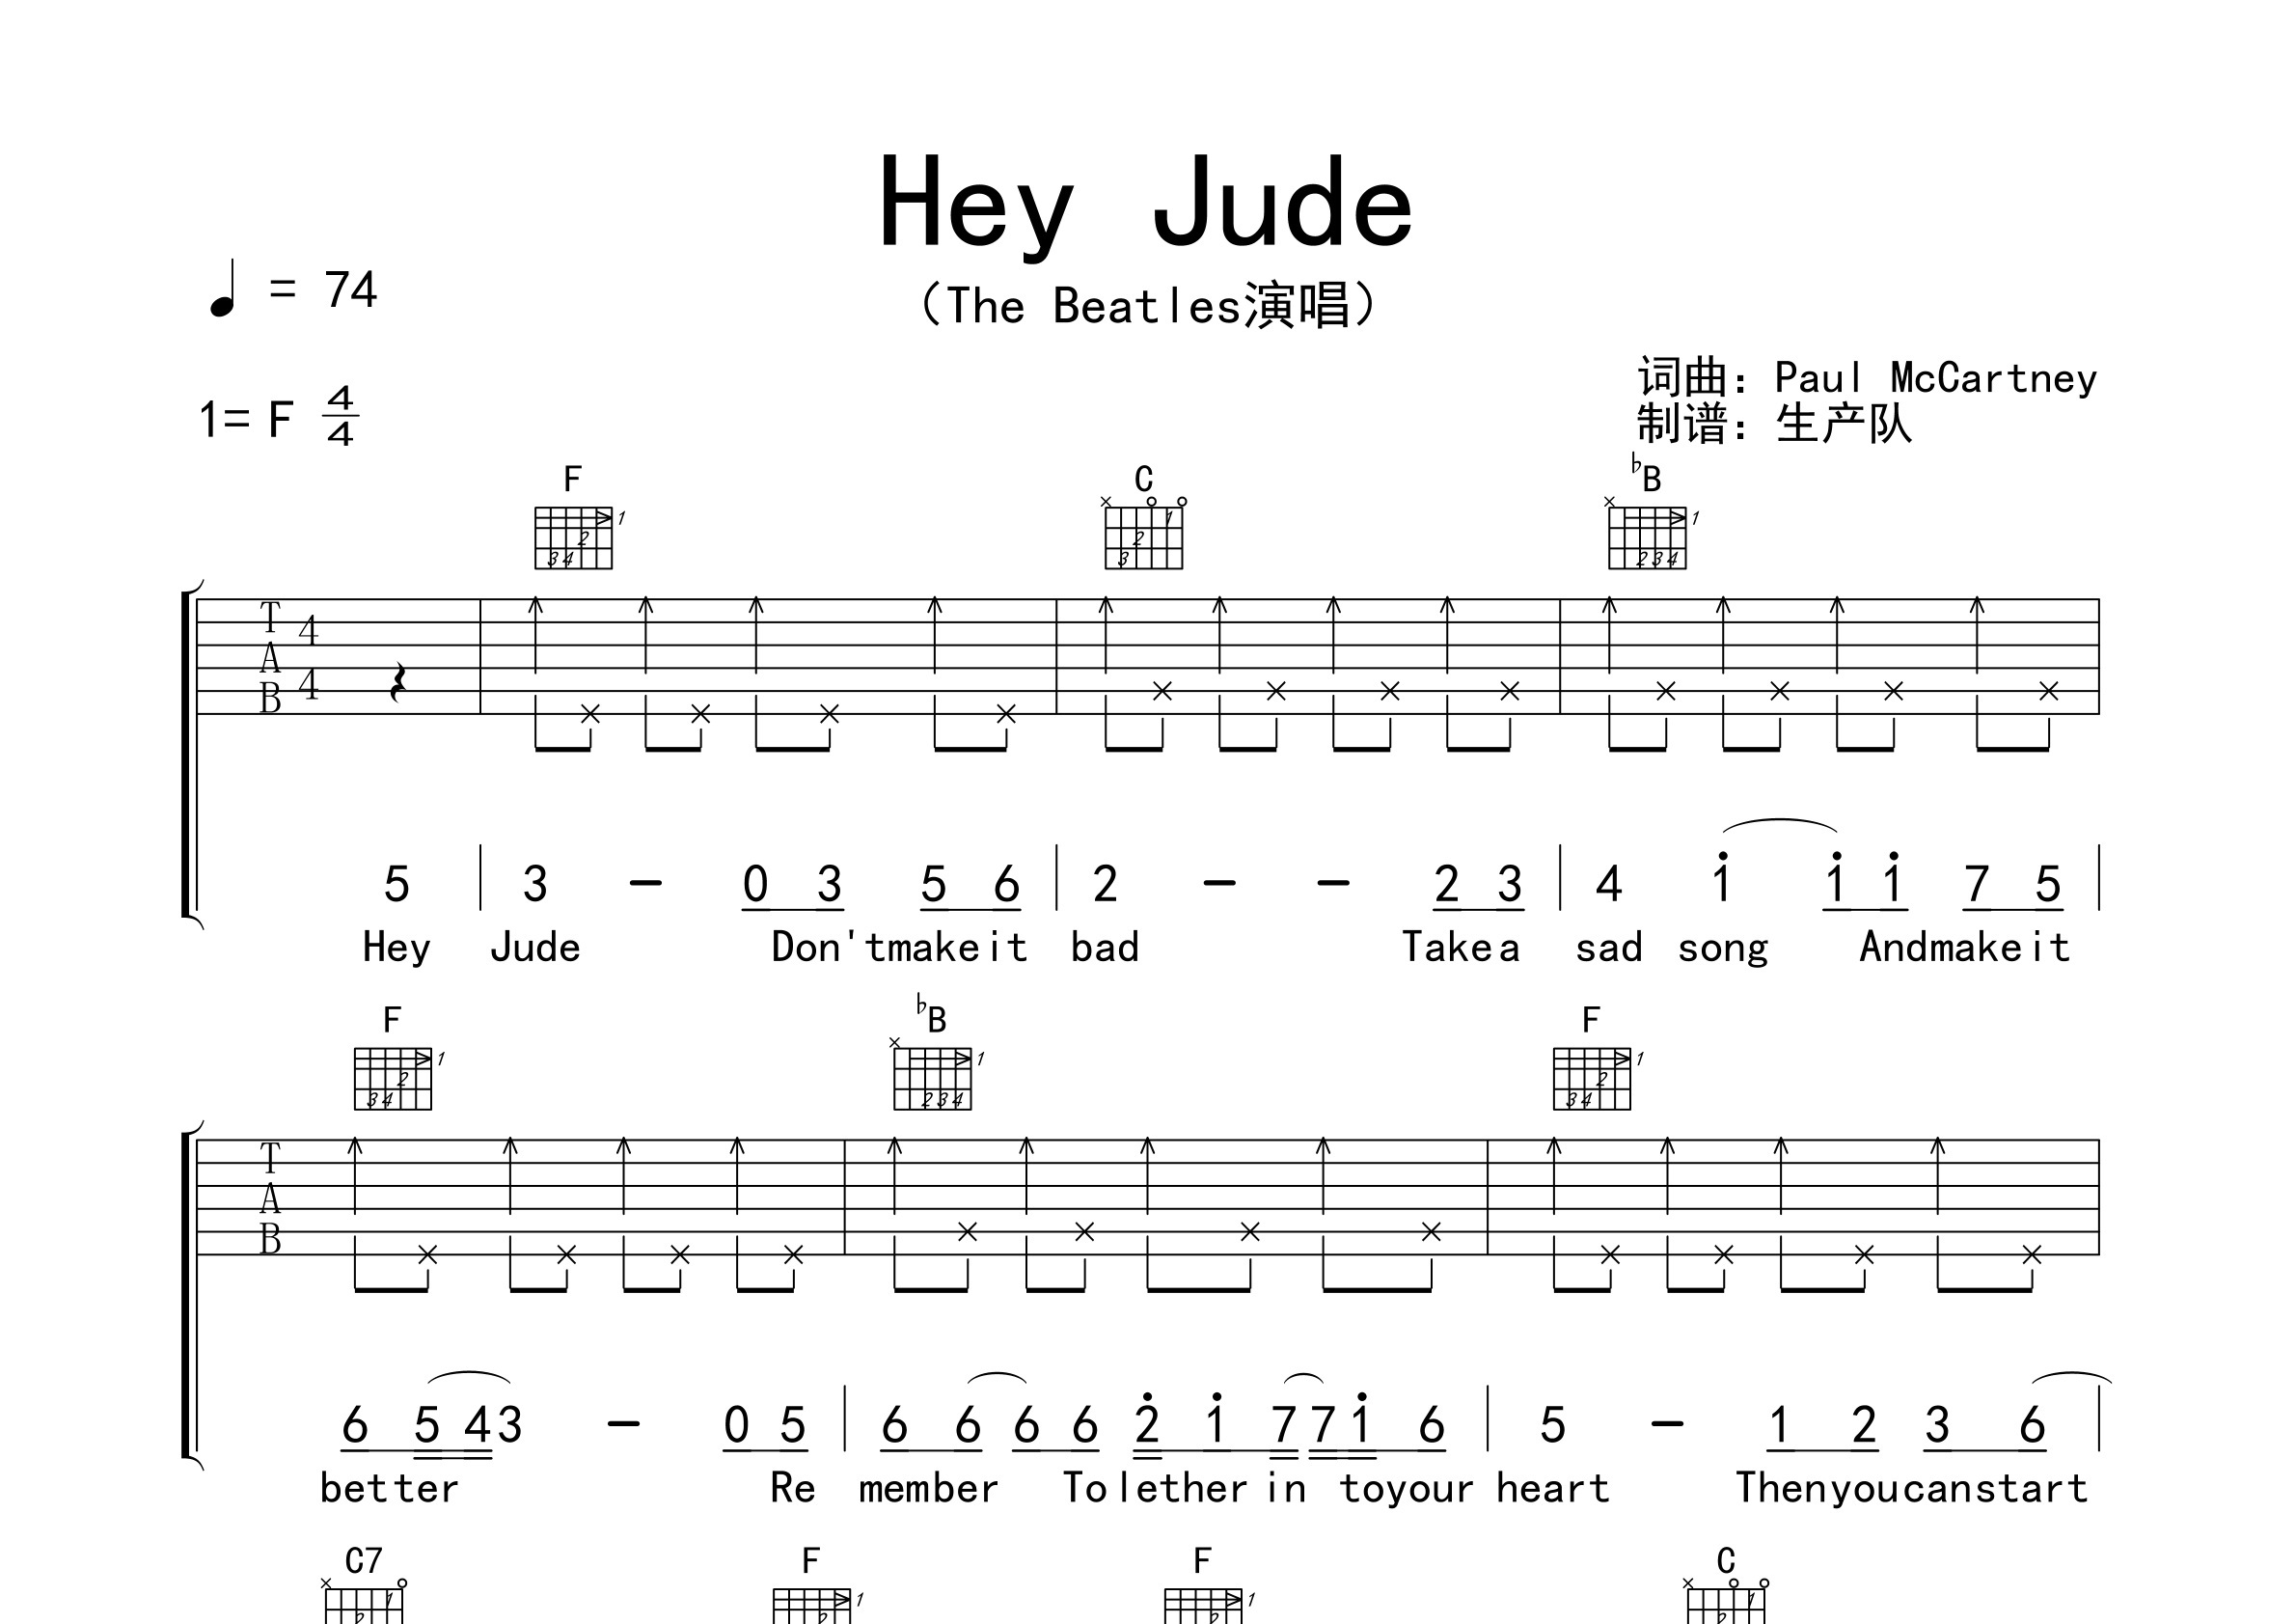 Hey Jude (3)吉他谱 甲壳虫乐队-彼岸吉他 - 一站式吉他爱好者服务平台